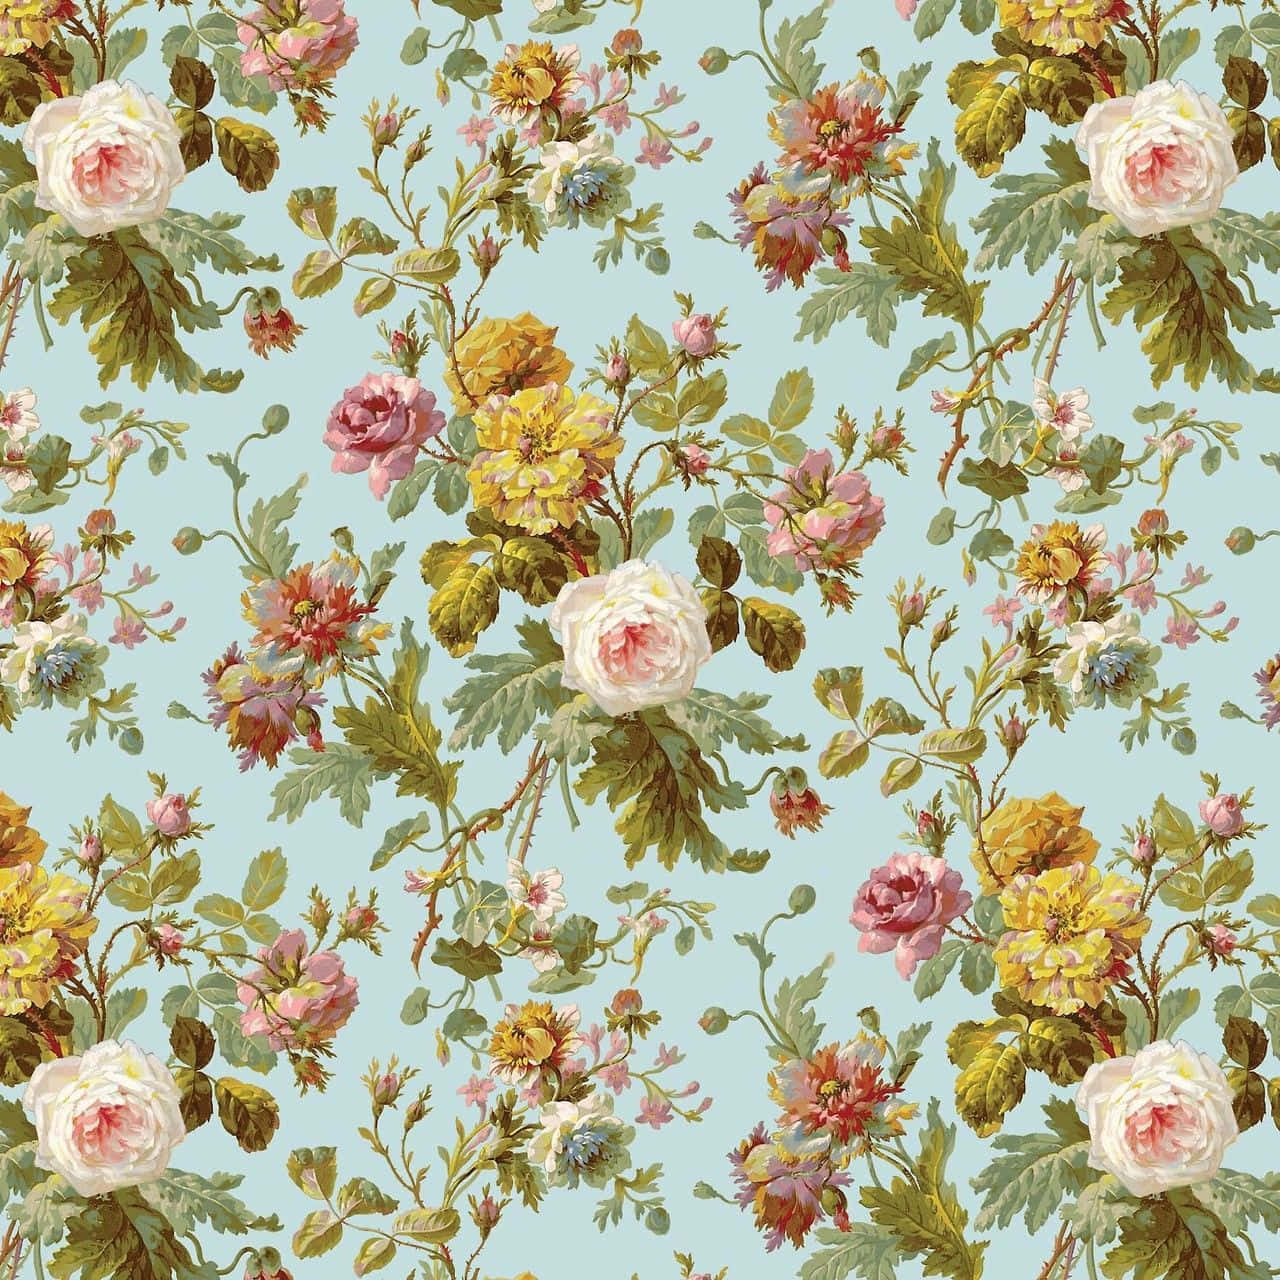 Enblommig Tapet Med Rosa Och Gula Blommor. Wallpaper